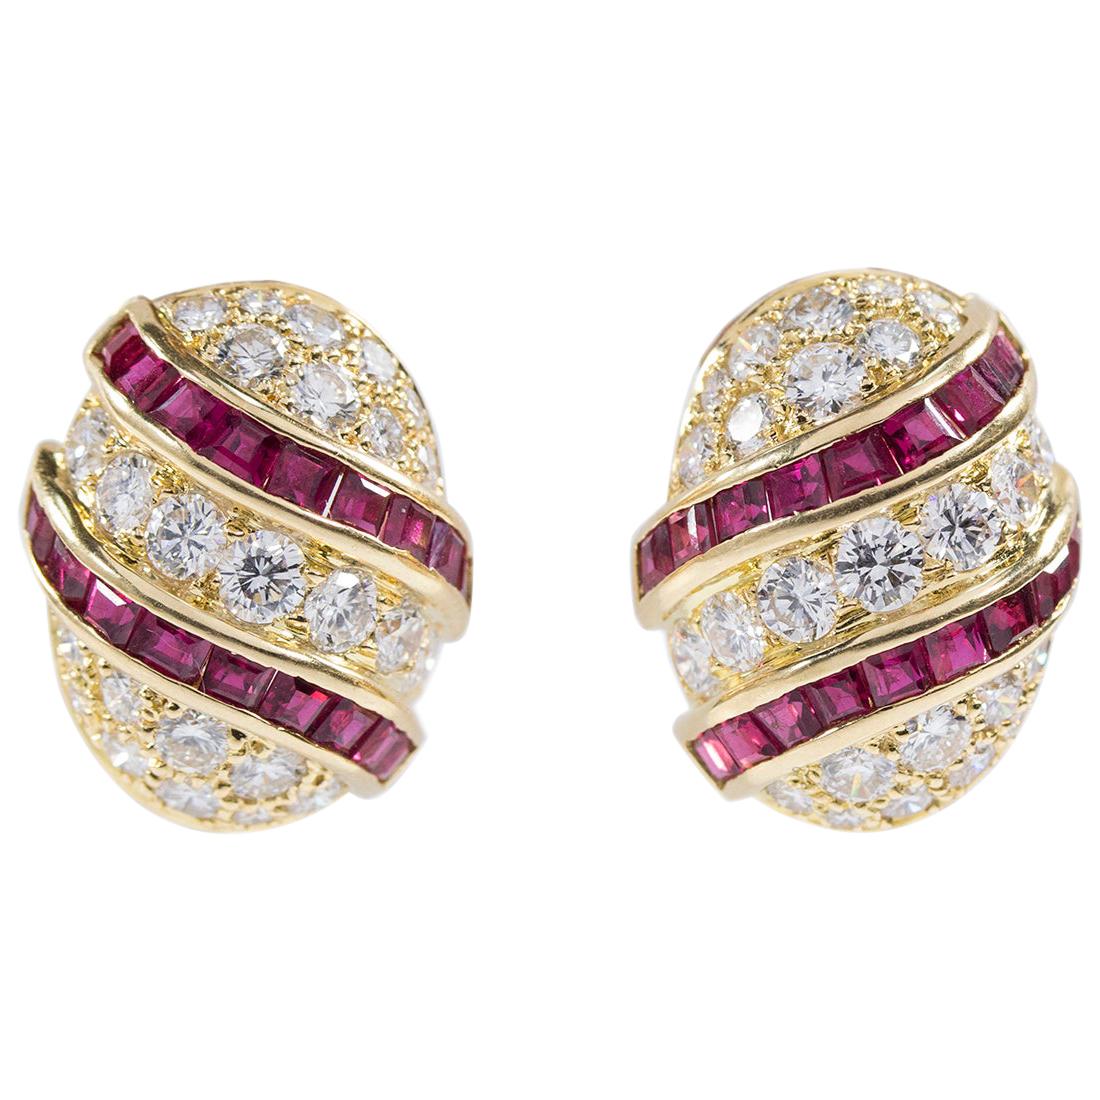 Oscar Heyman 18 Karat Gold Calibre Ruby and Round Diamond Clip Earrings